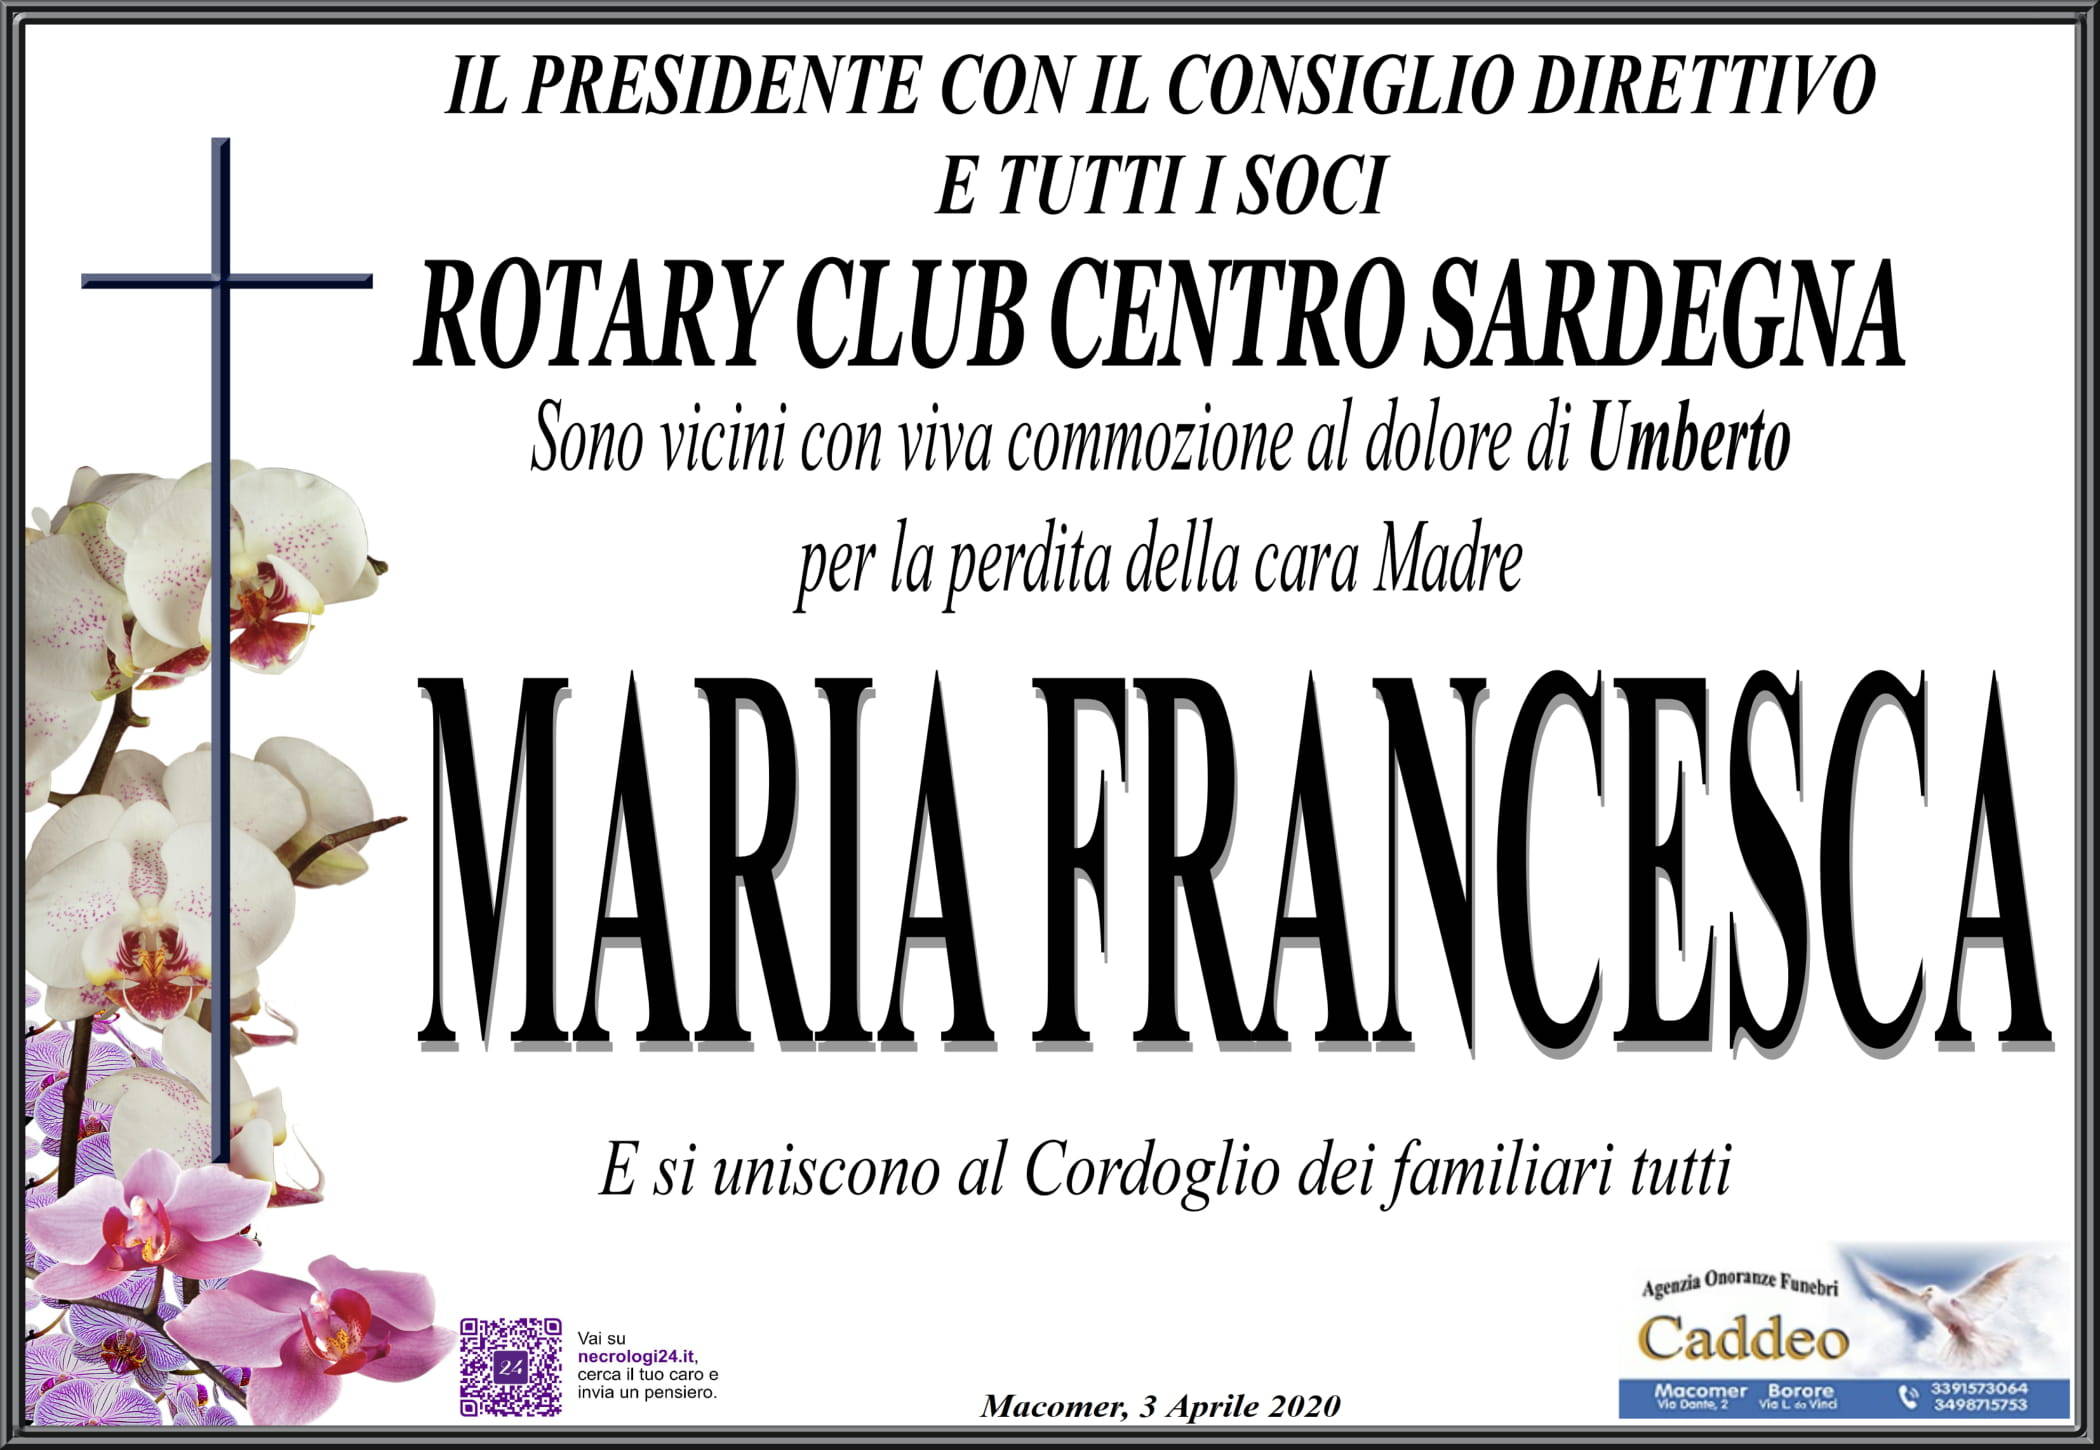 Rotary Club Centro Sardegna